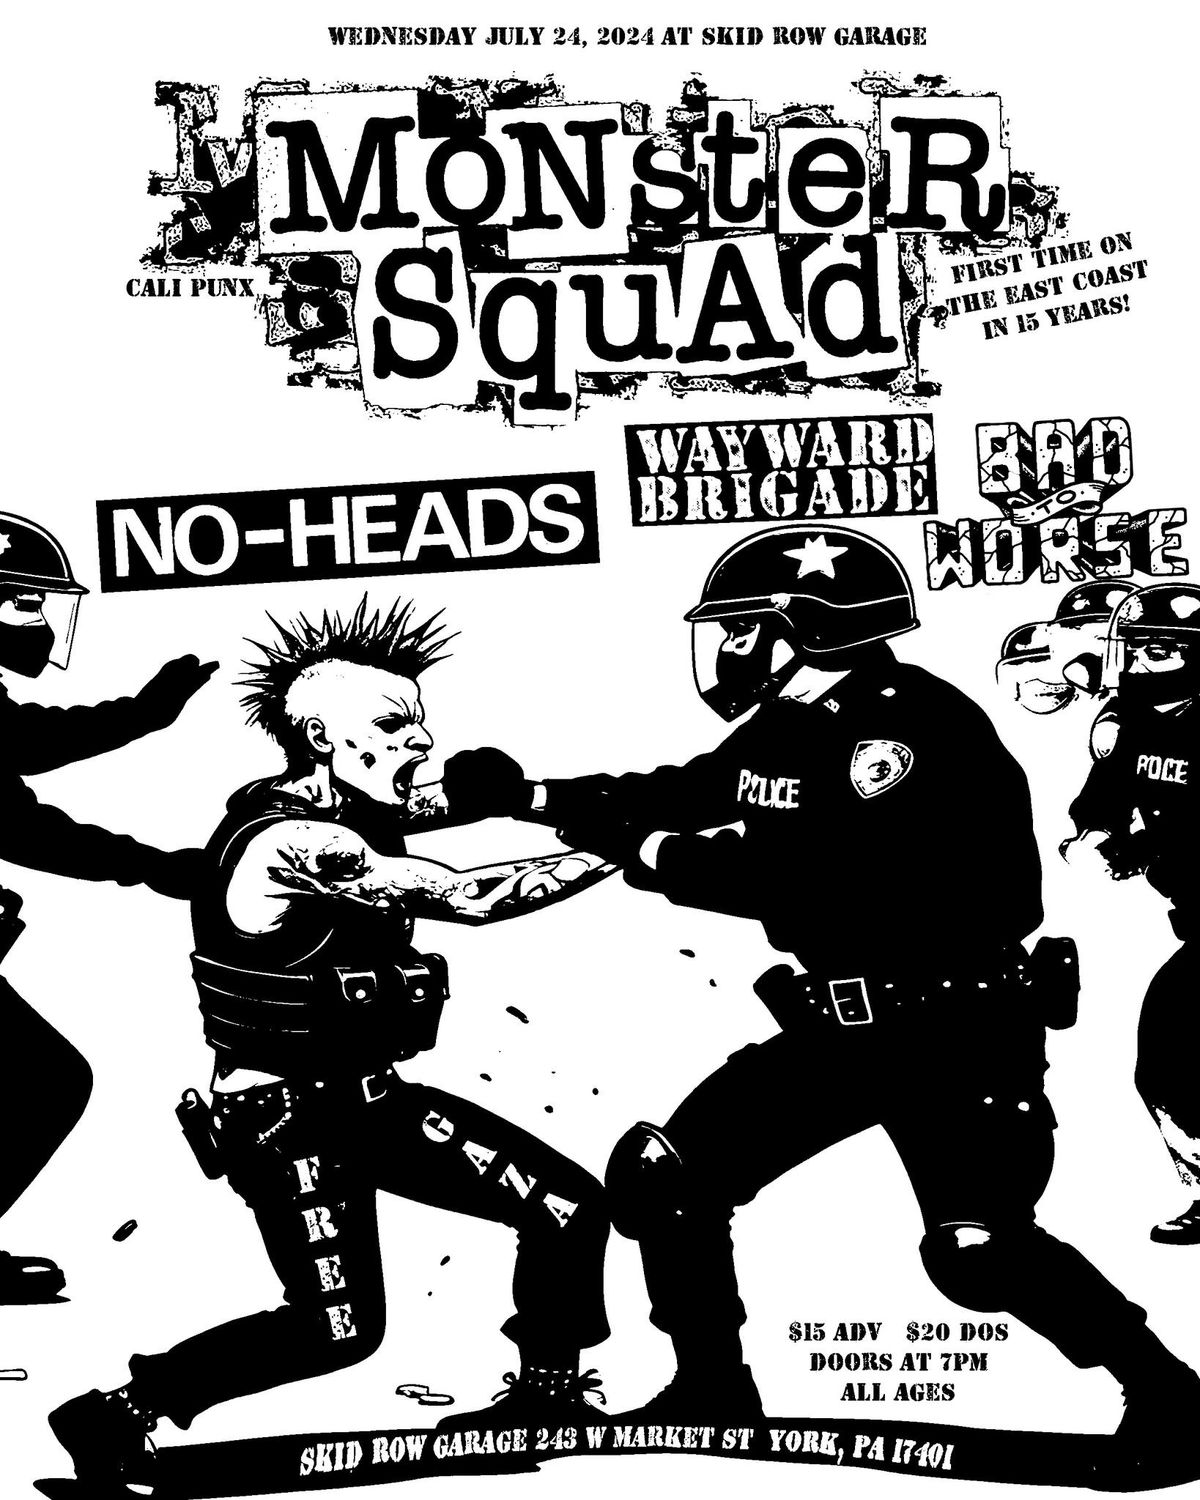 Monster Squad, No-Heads, Wayward Brigade, and Bad to Worse at Skid Row Garage